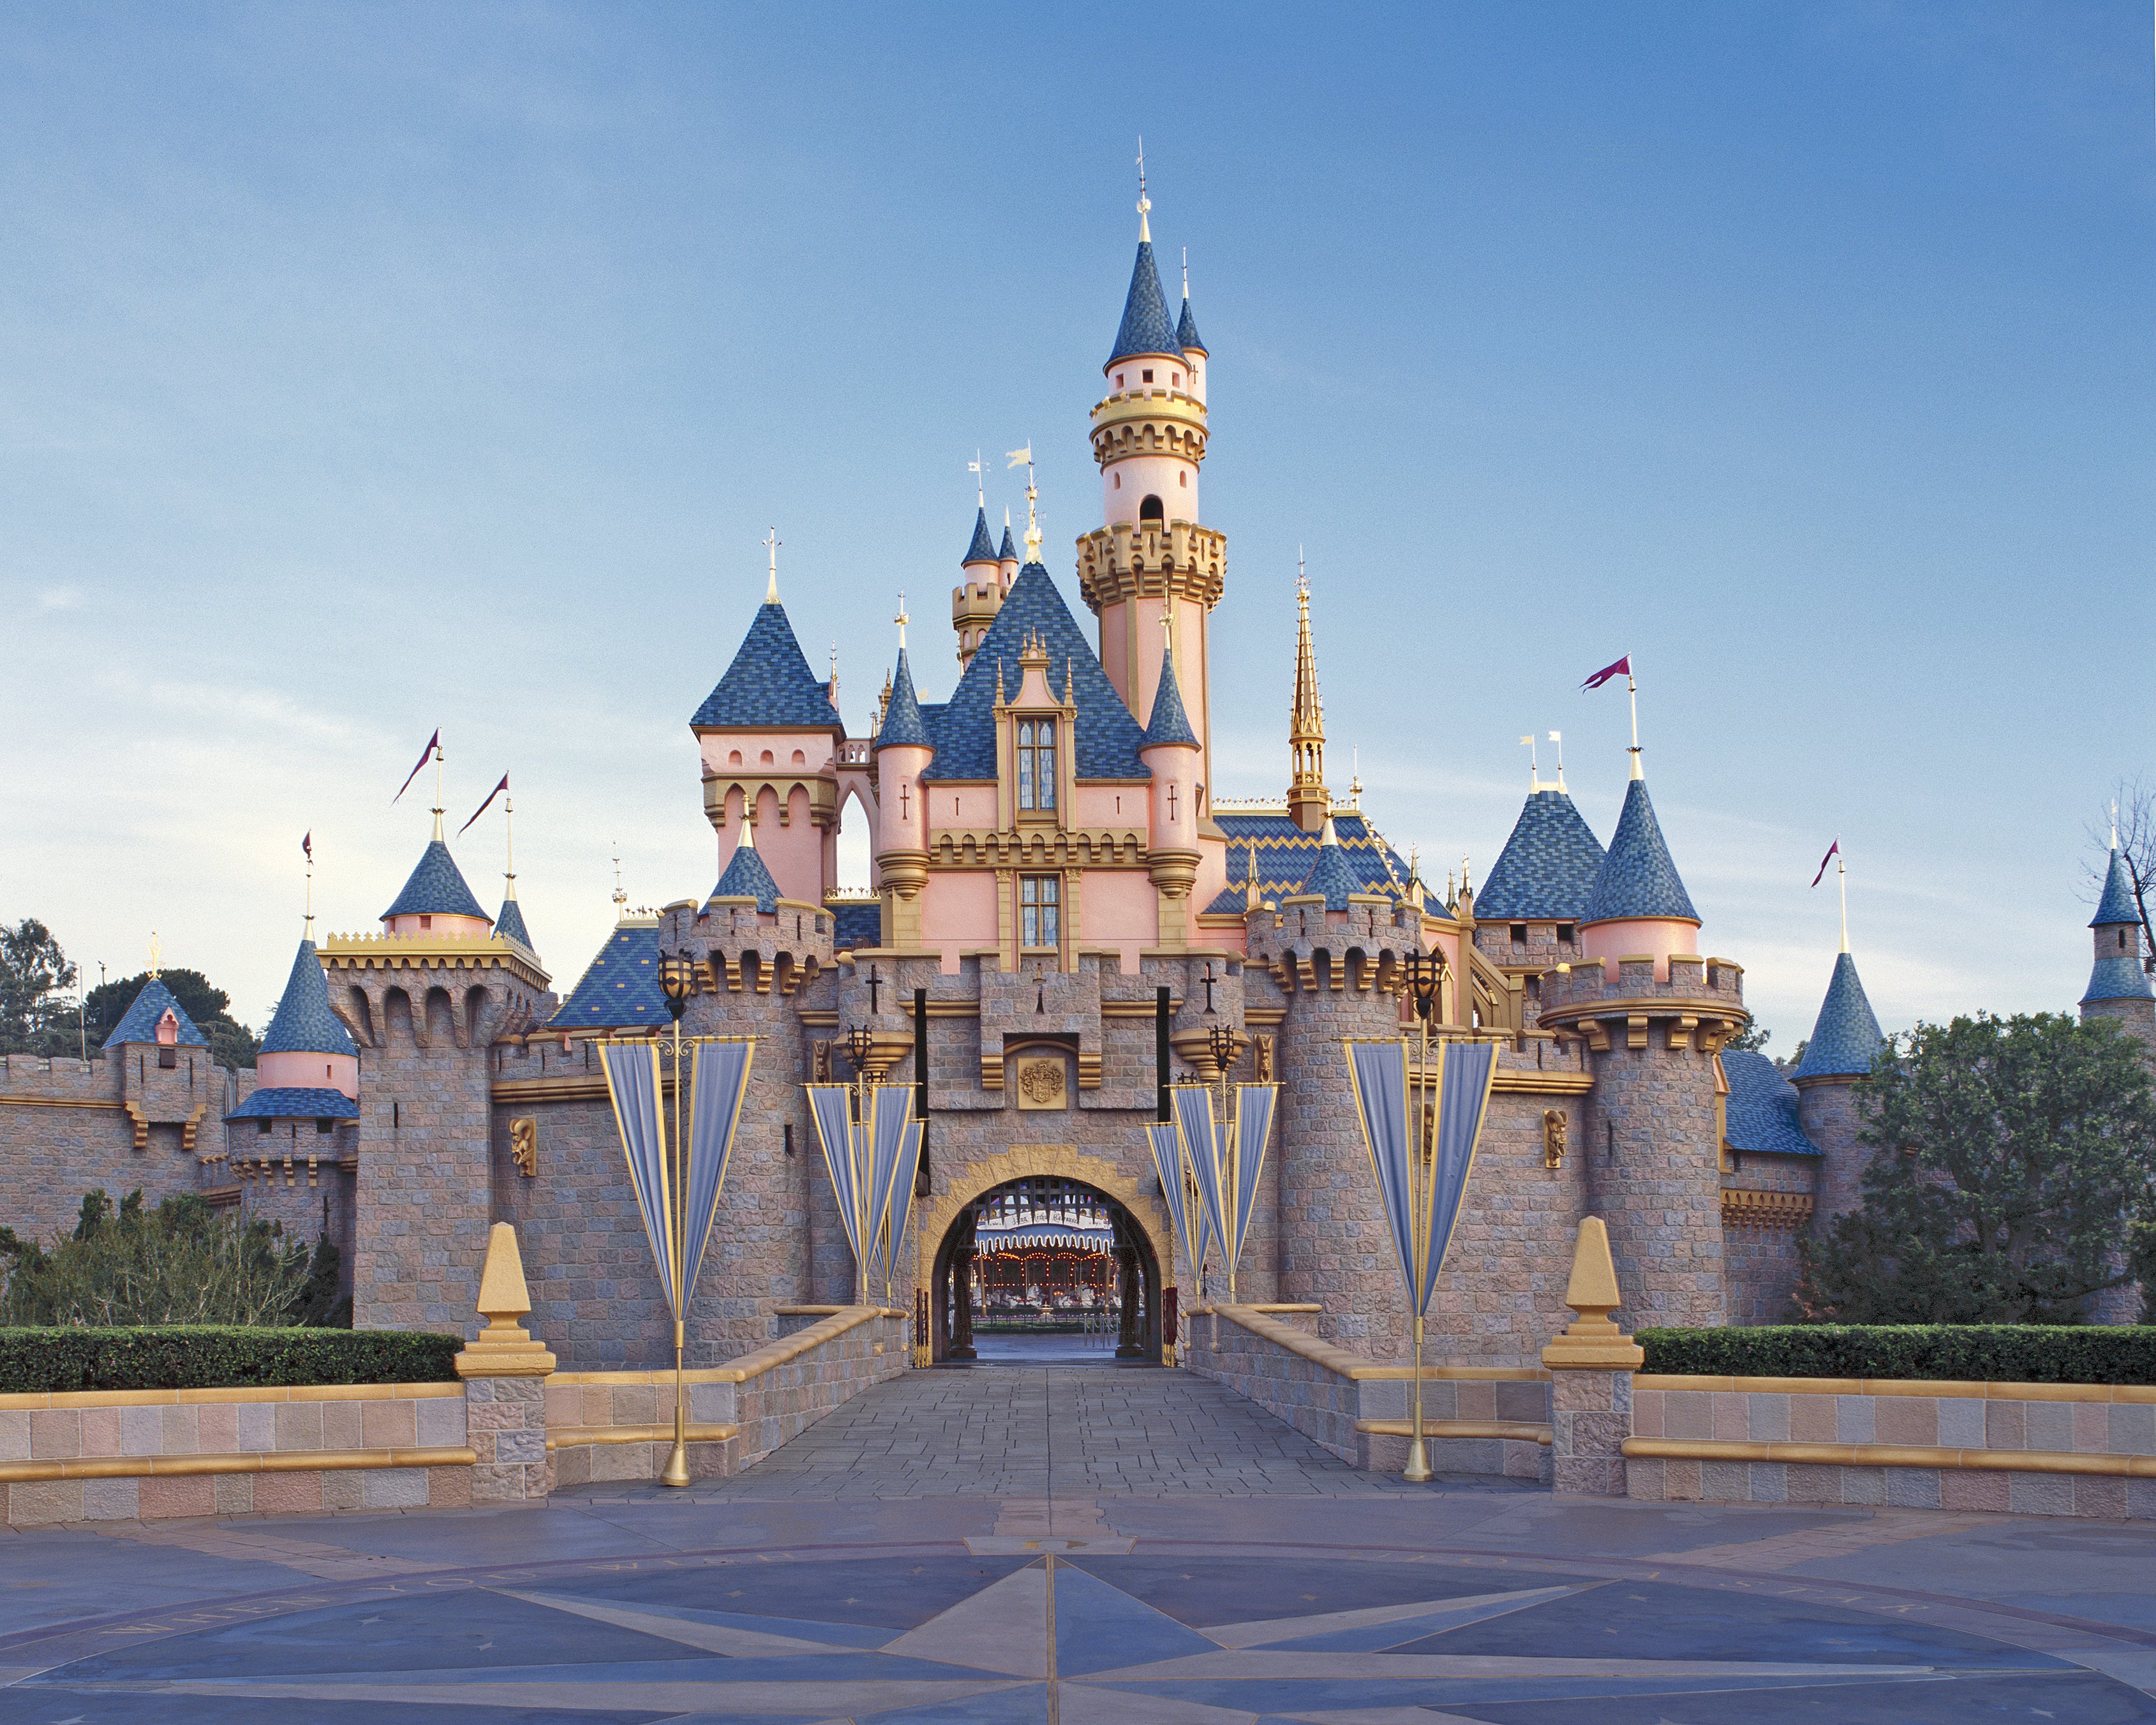 Tips for Your Disneyland Visit